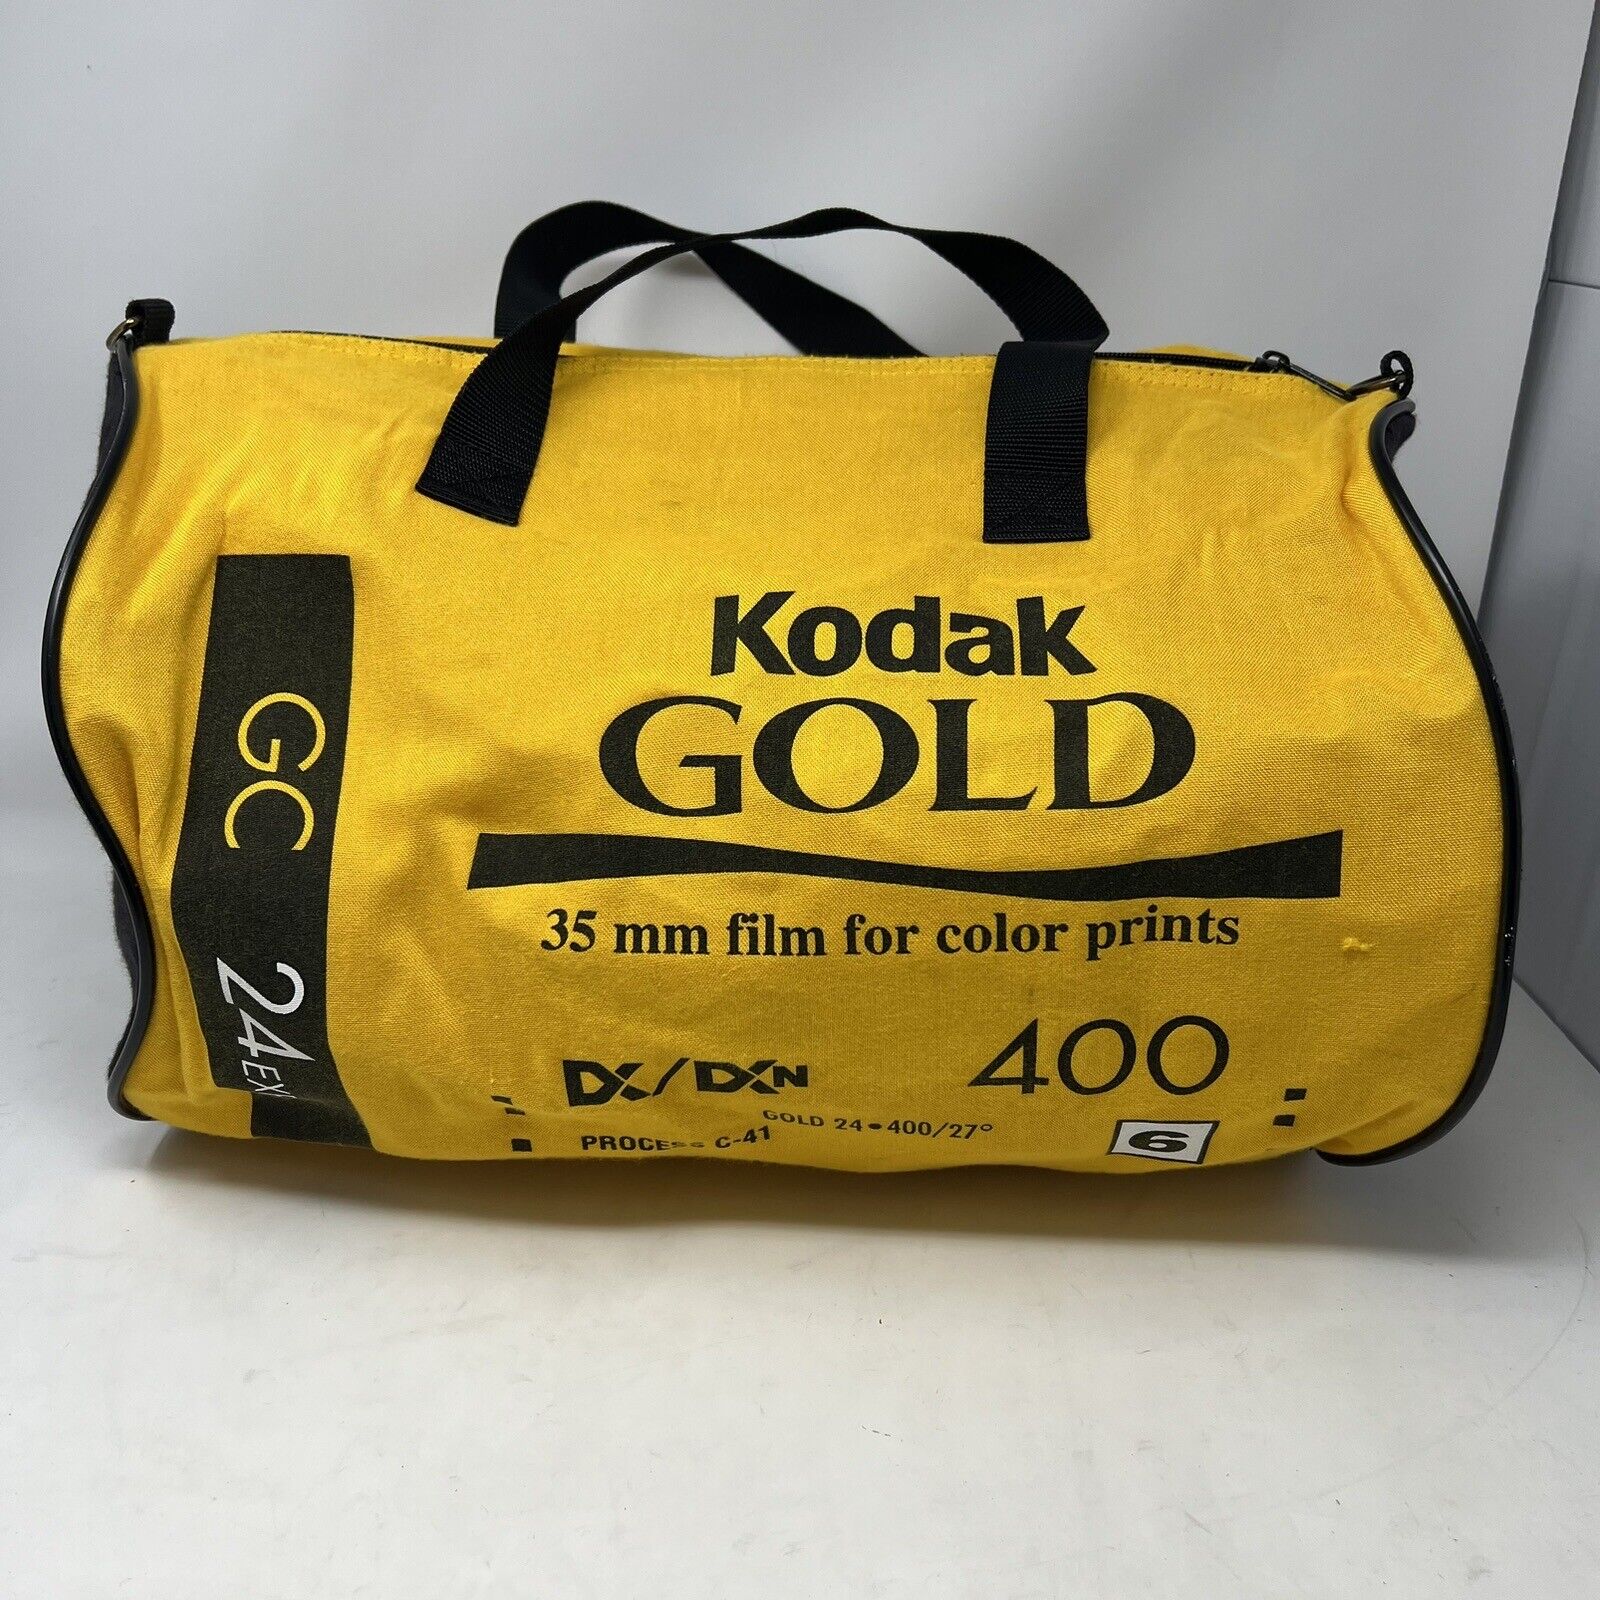 Kodak Gold 400 Duffle Bag Film Roll Vintage Yellow Bag